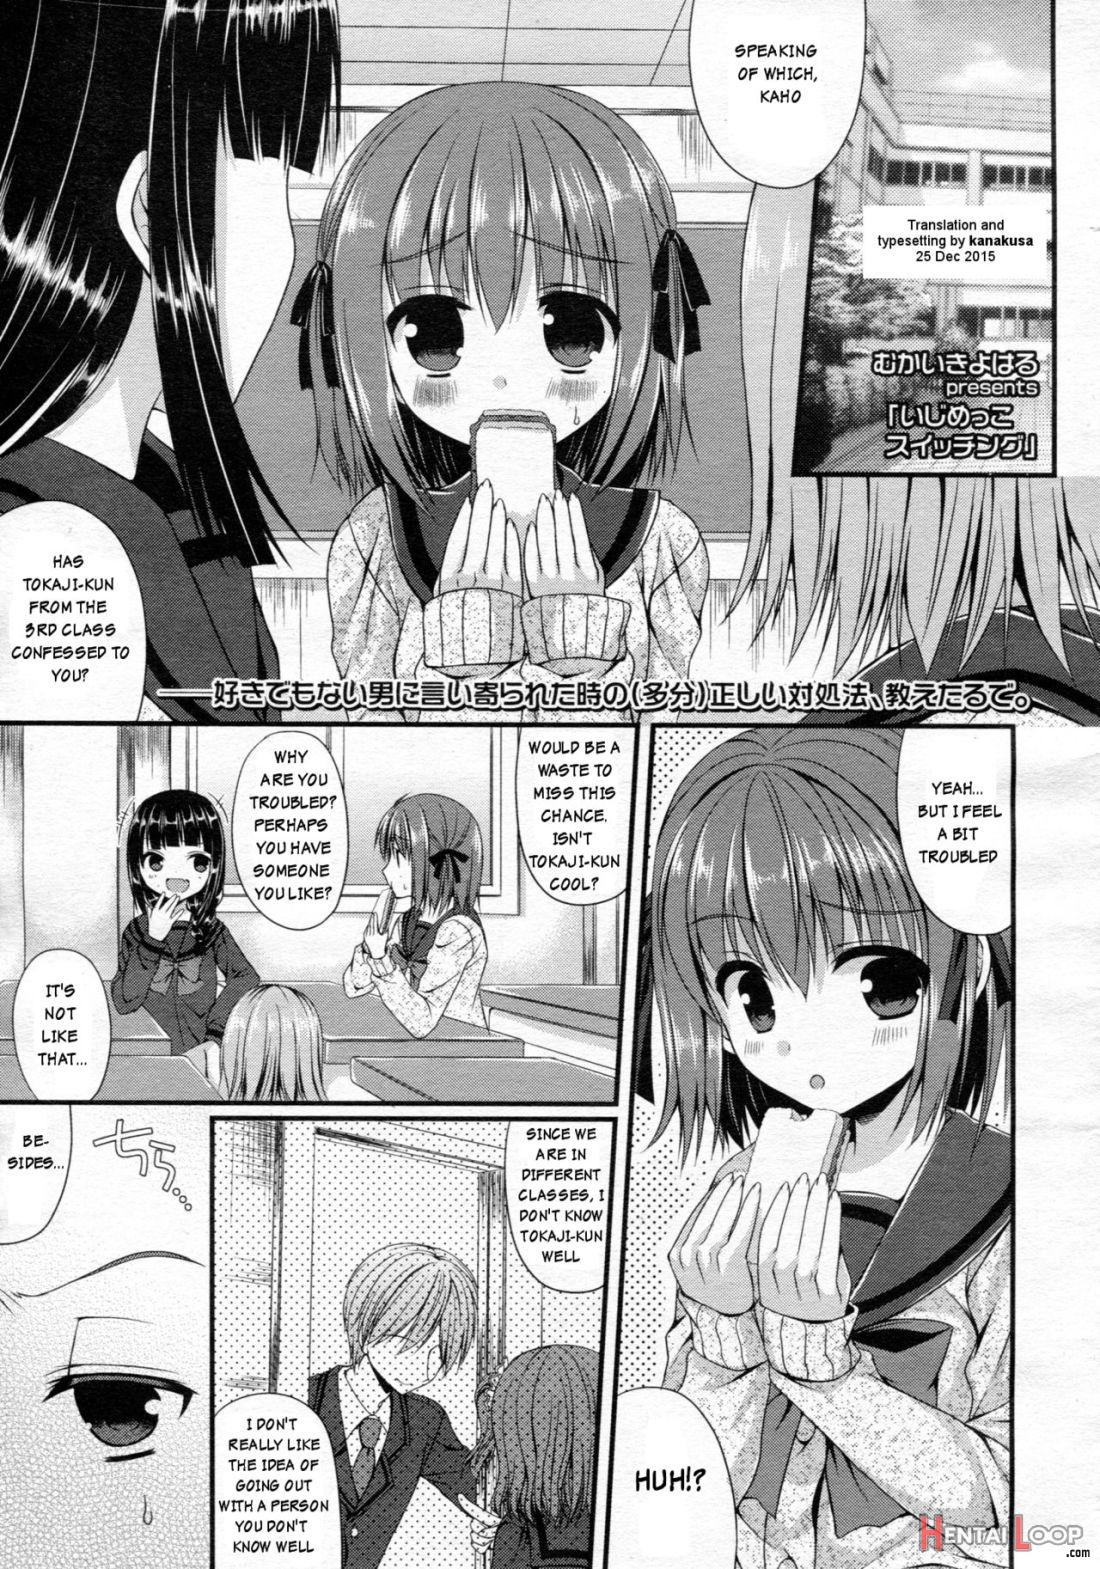 Ijimekko Switching page 1